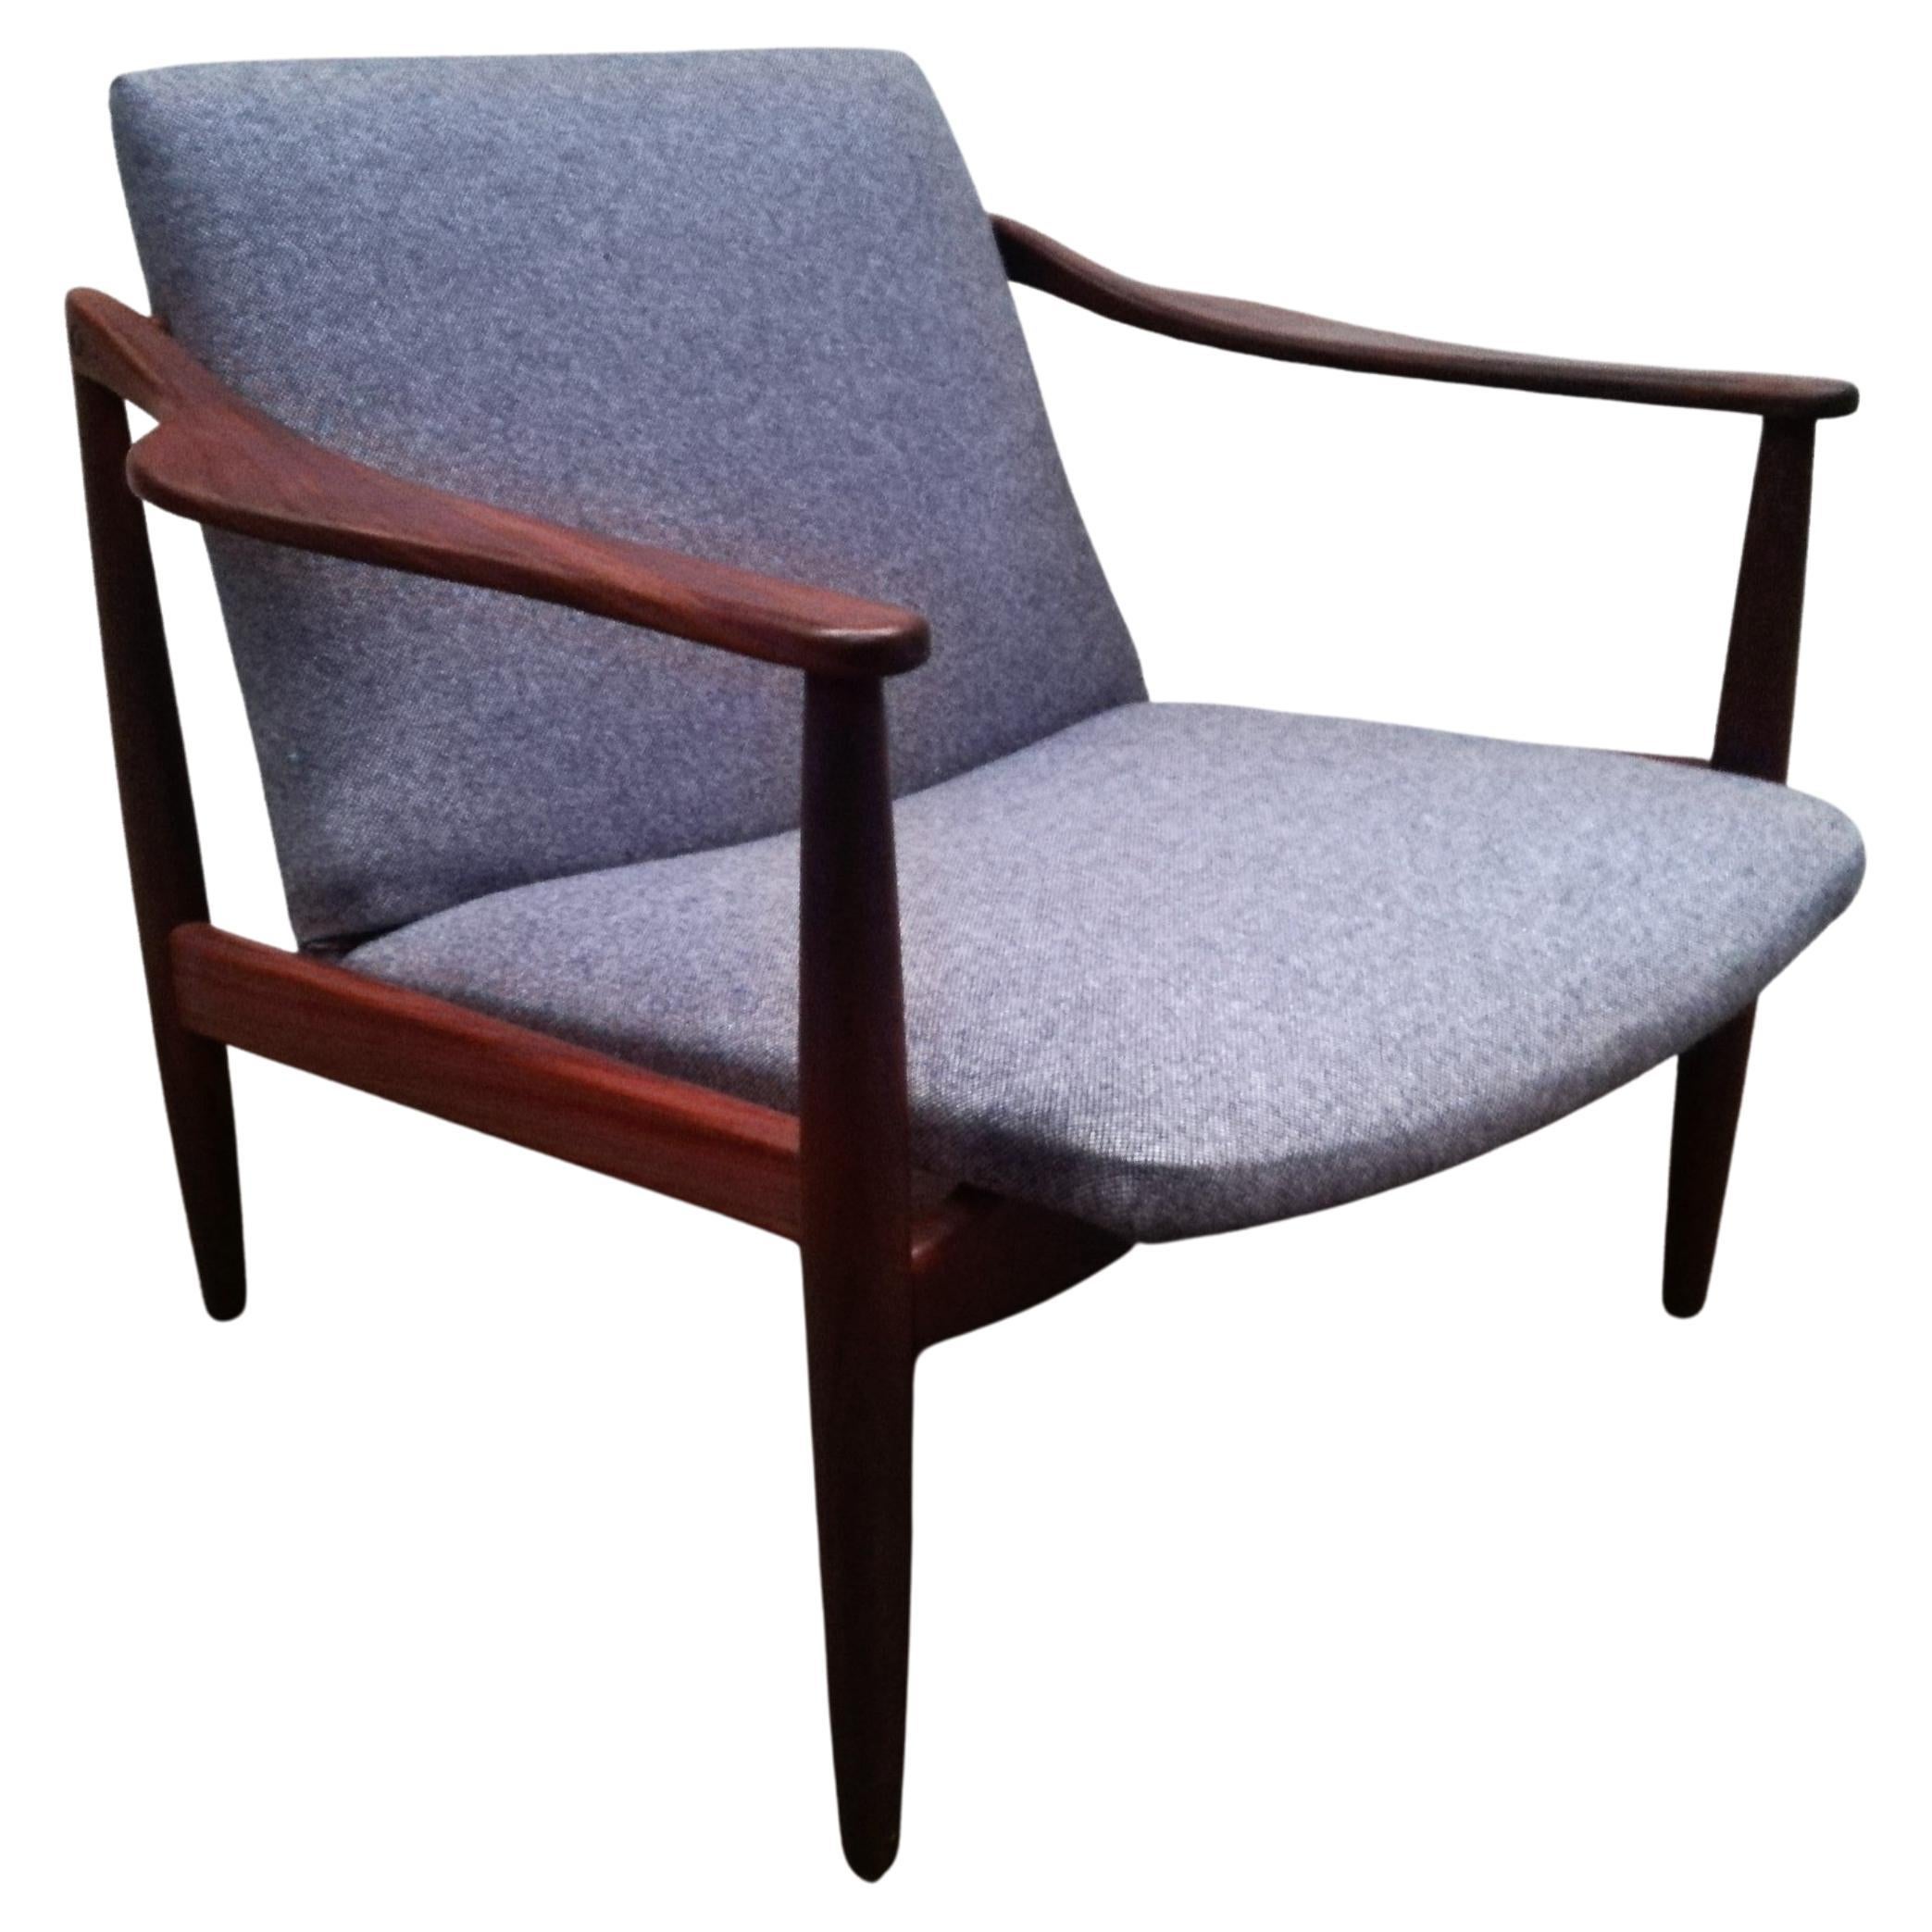 Vintage German Teak Lounge Chair by Hartmut Lohmeyer for Wilkhahn, 1950s